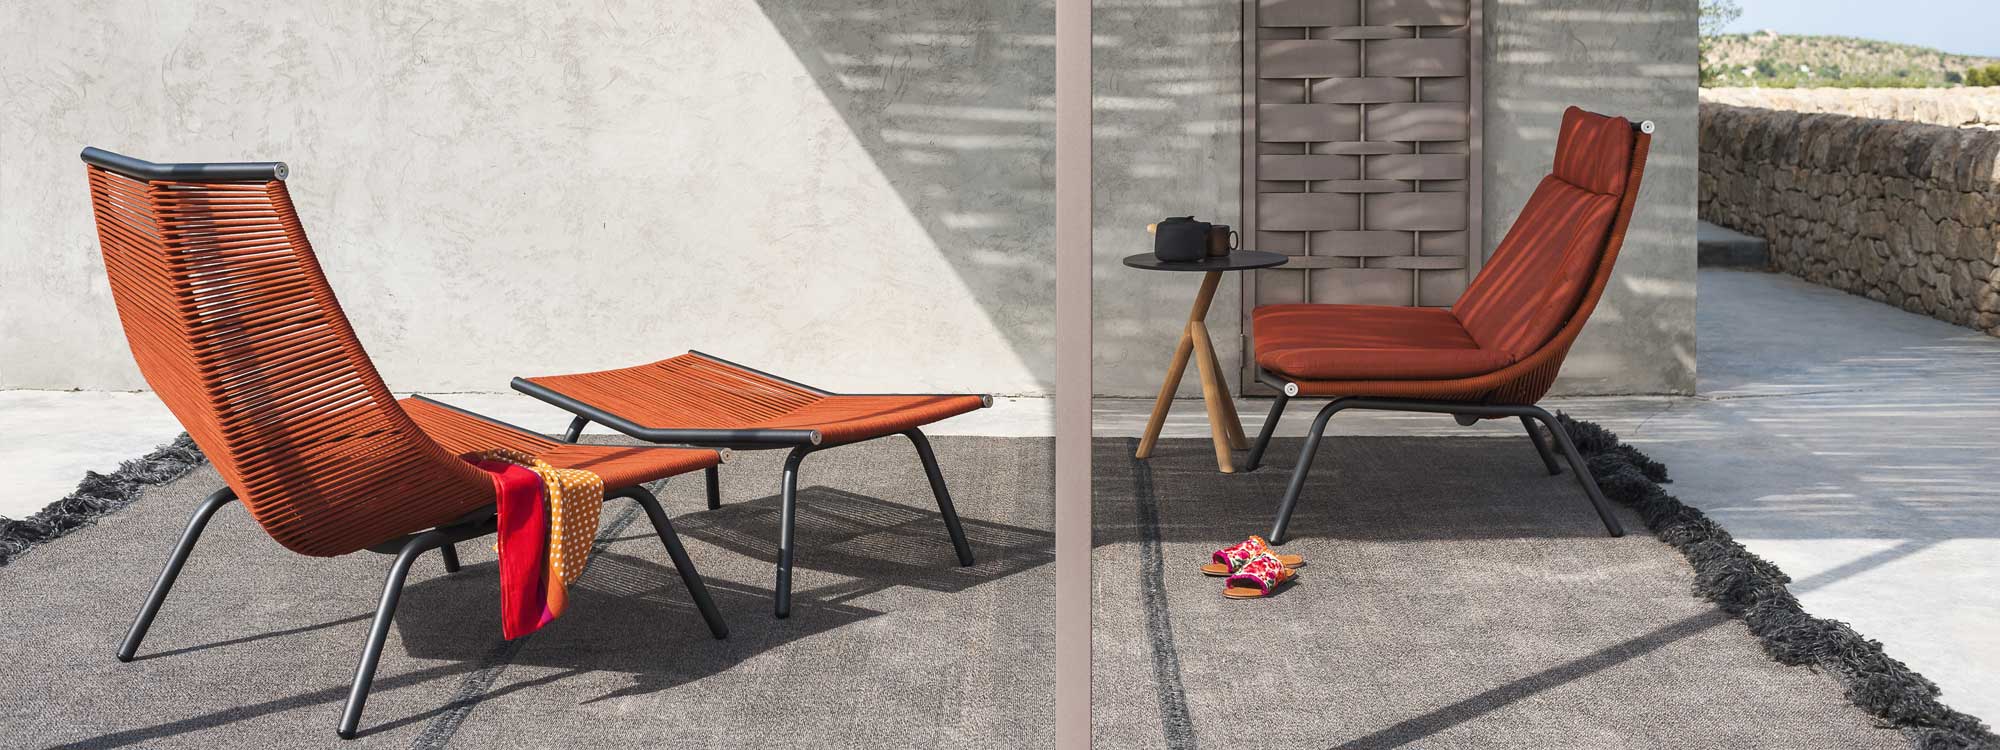 Pair of orange Laze garden chairs on modern terrace